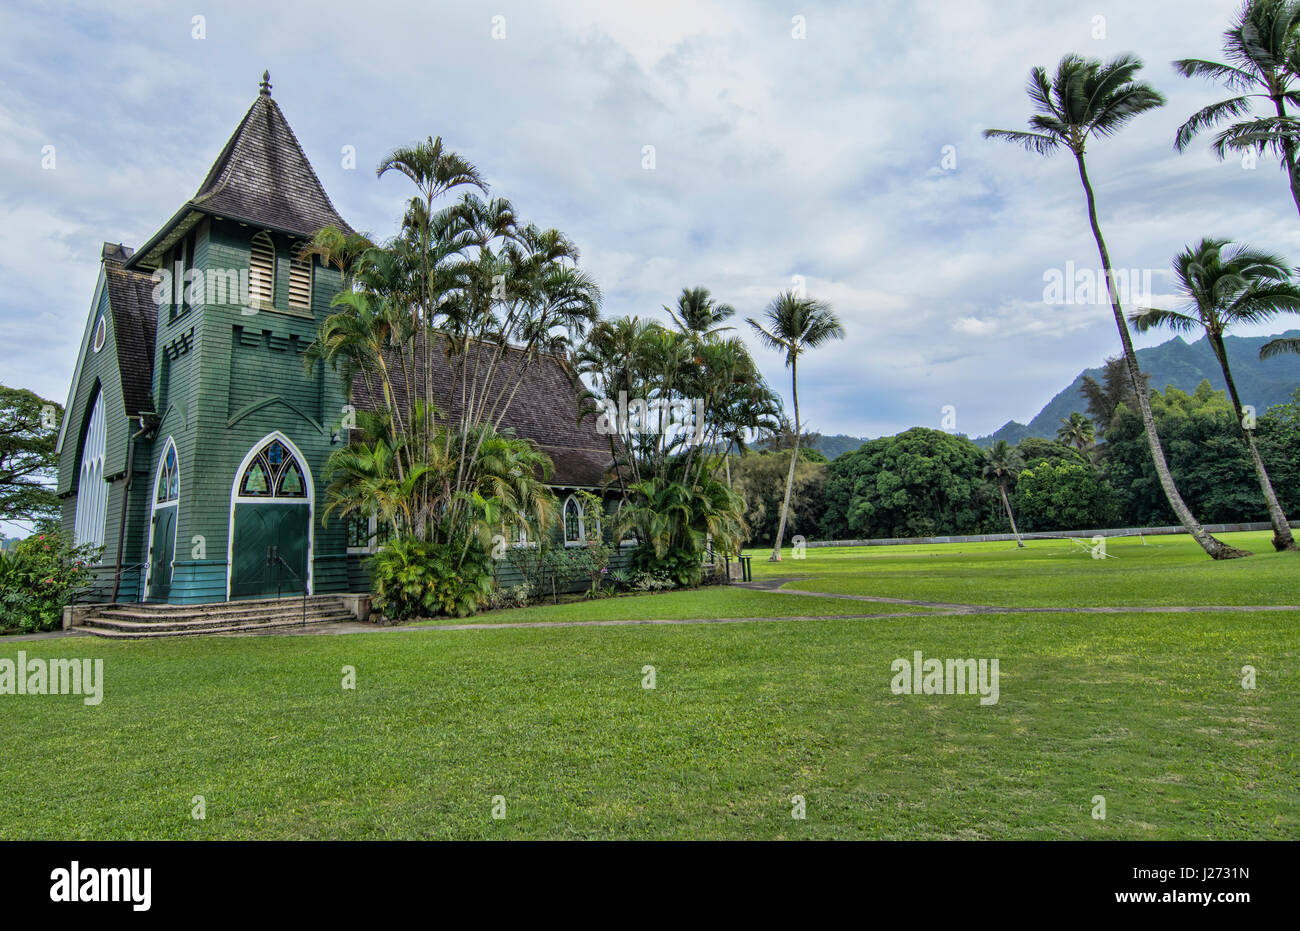 Hanalei Kauai Hawaii the old Green Church called Waiola Huiia Church 1912 tourist attraction landmark Stock Photo